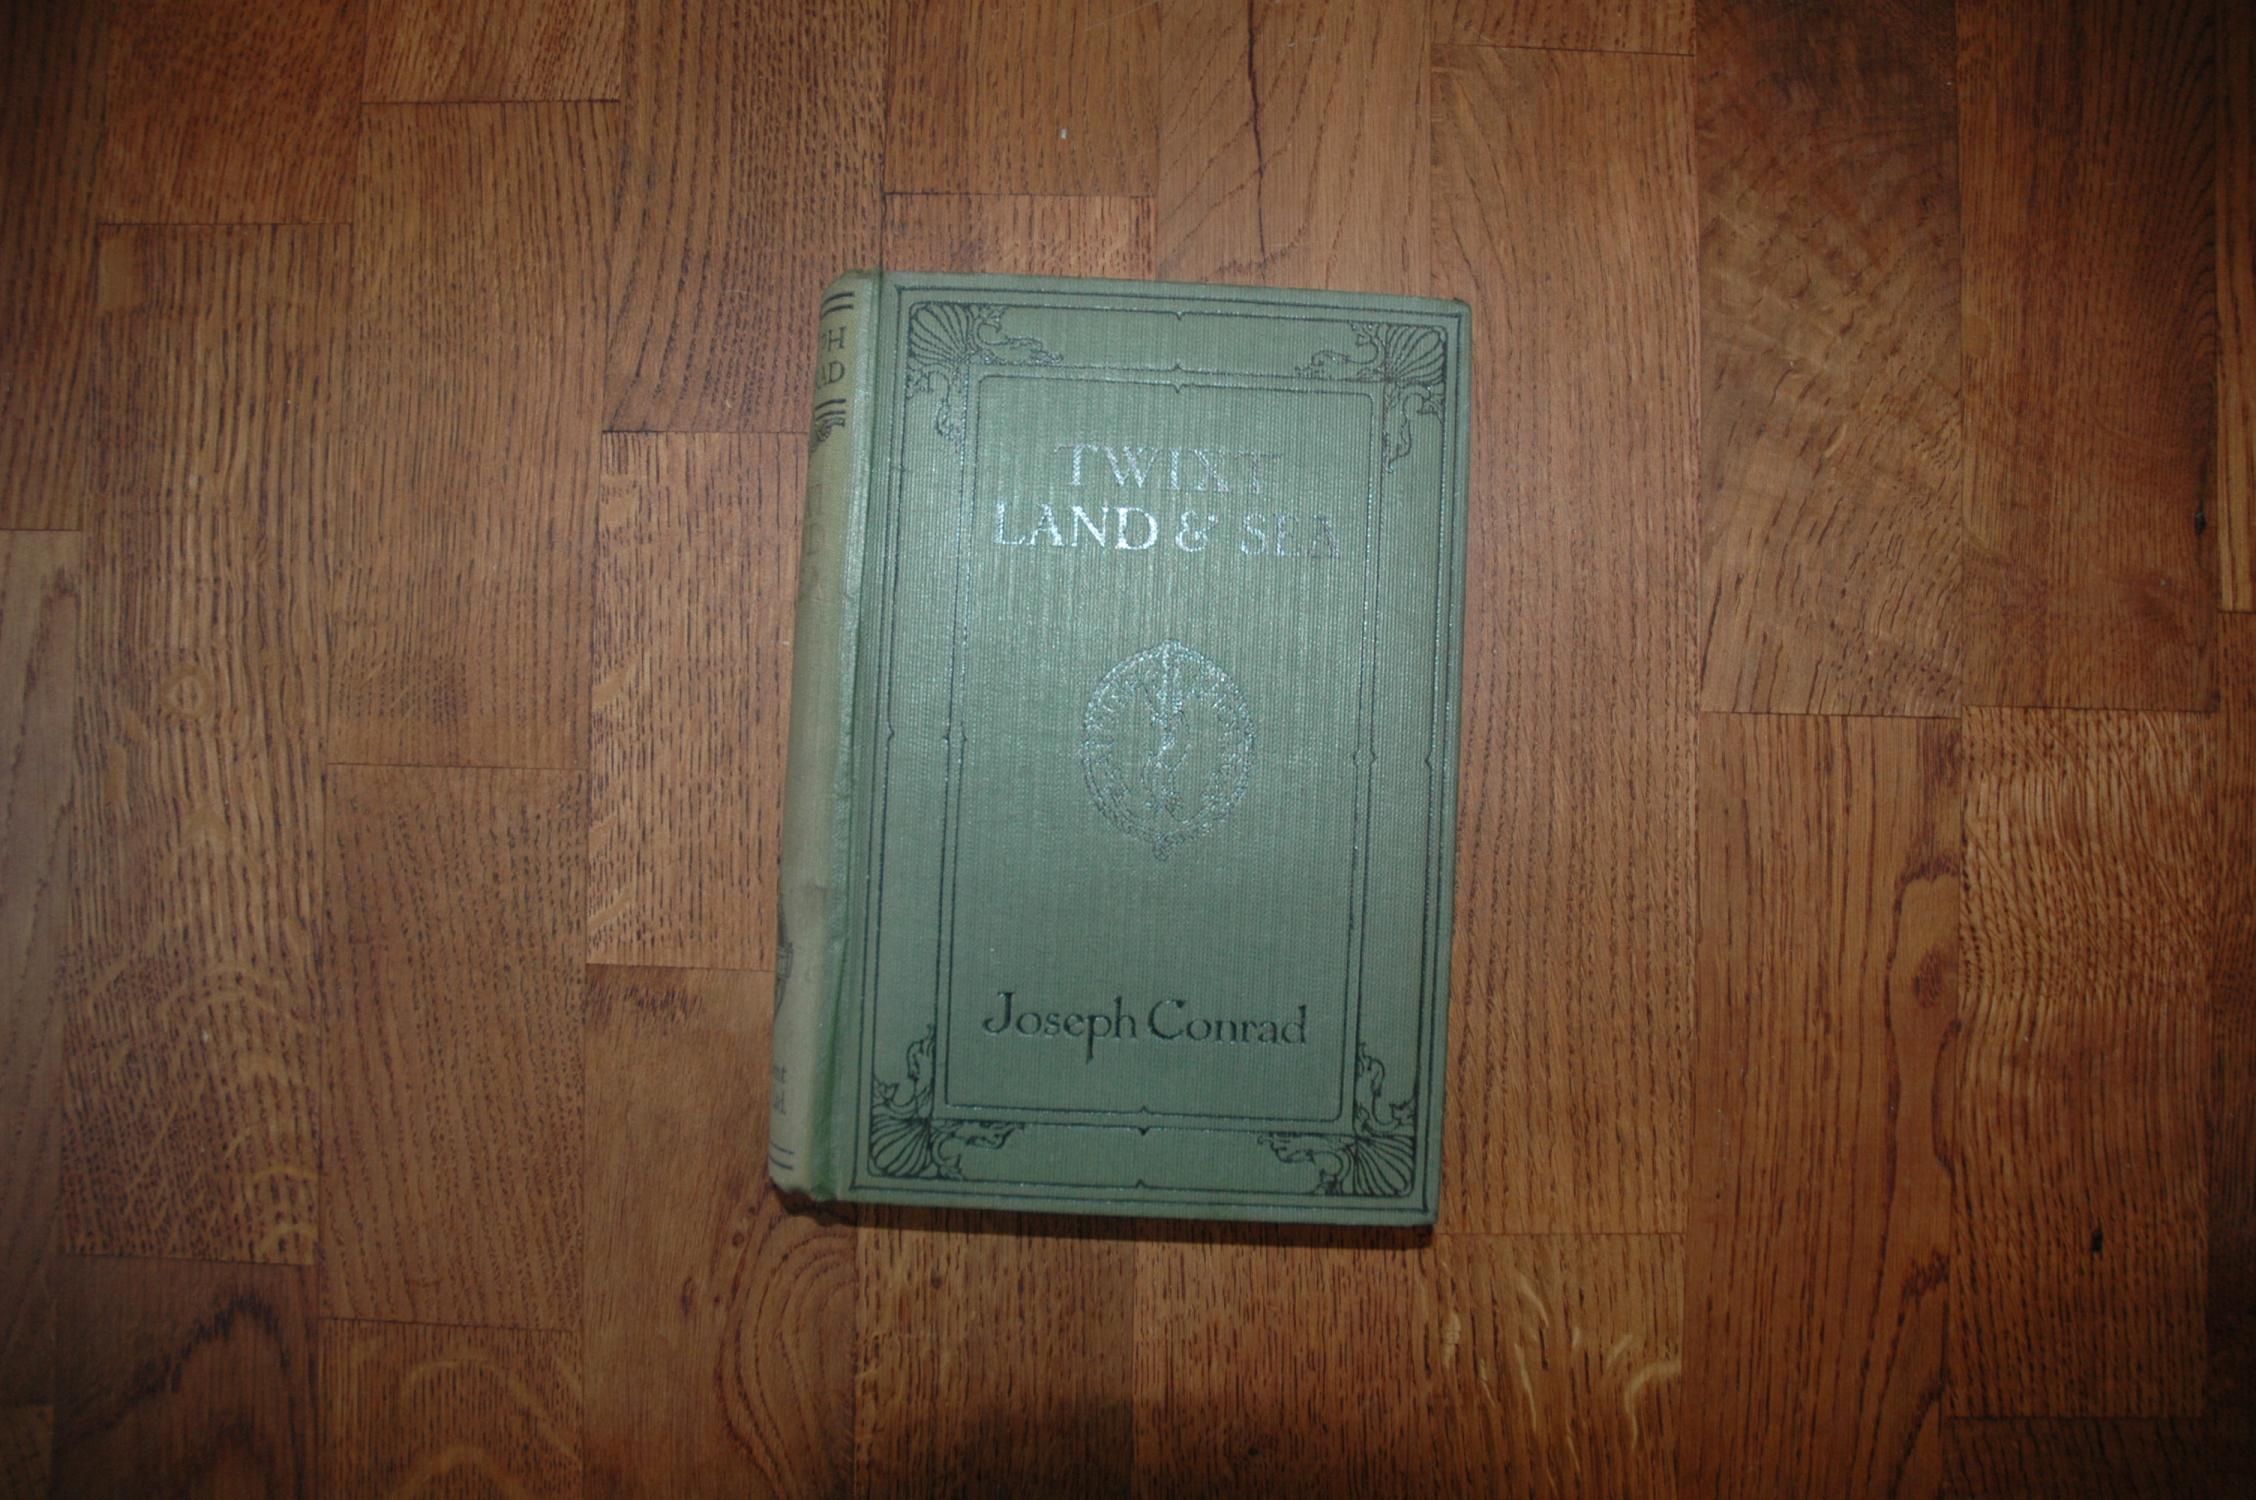 Twixt Land & Sea Tales - Joseph Conrad